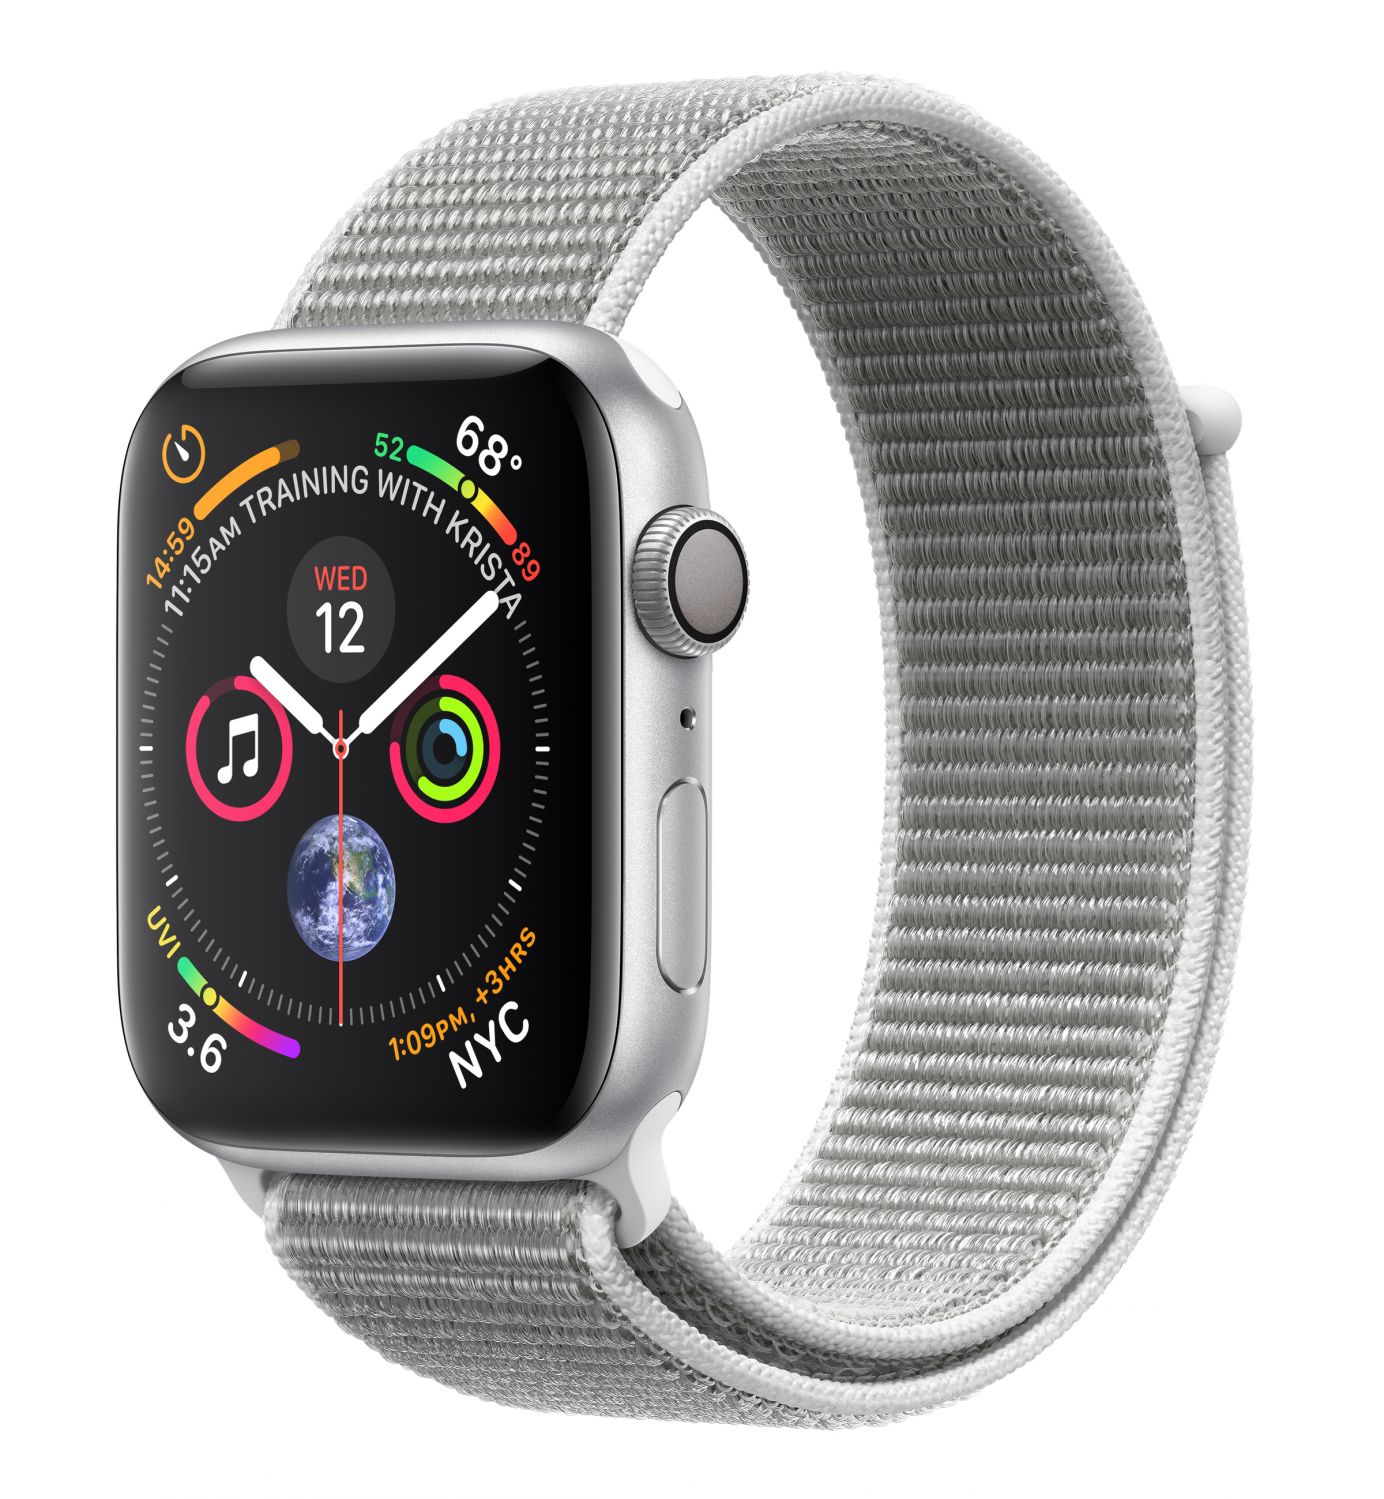 MU6C2TY/A - Reloj inteligent Apple Watch Seri 4 reloj inteligente Plata OLED GP (satlite)